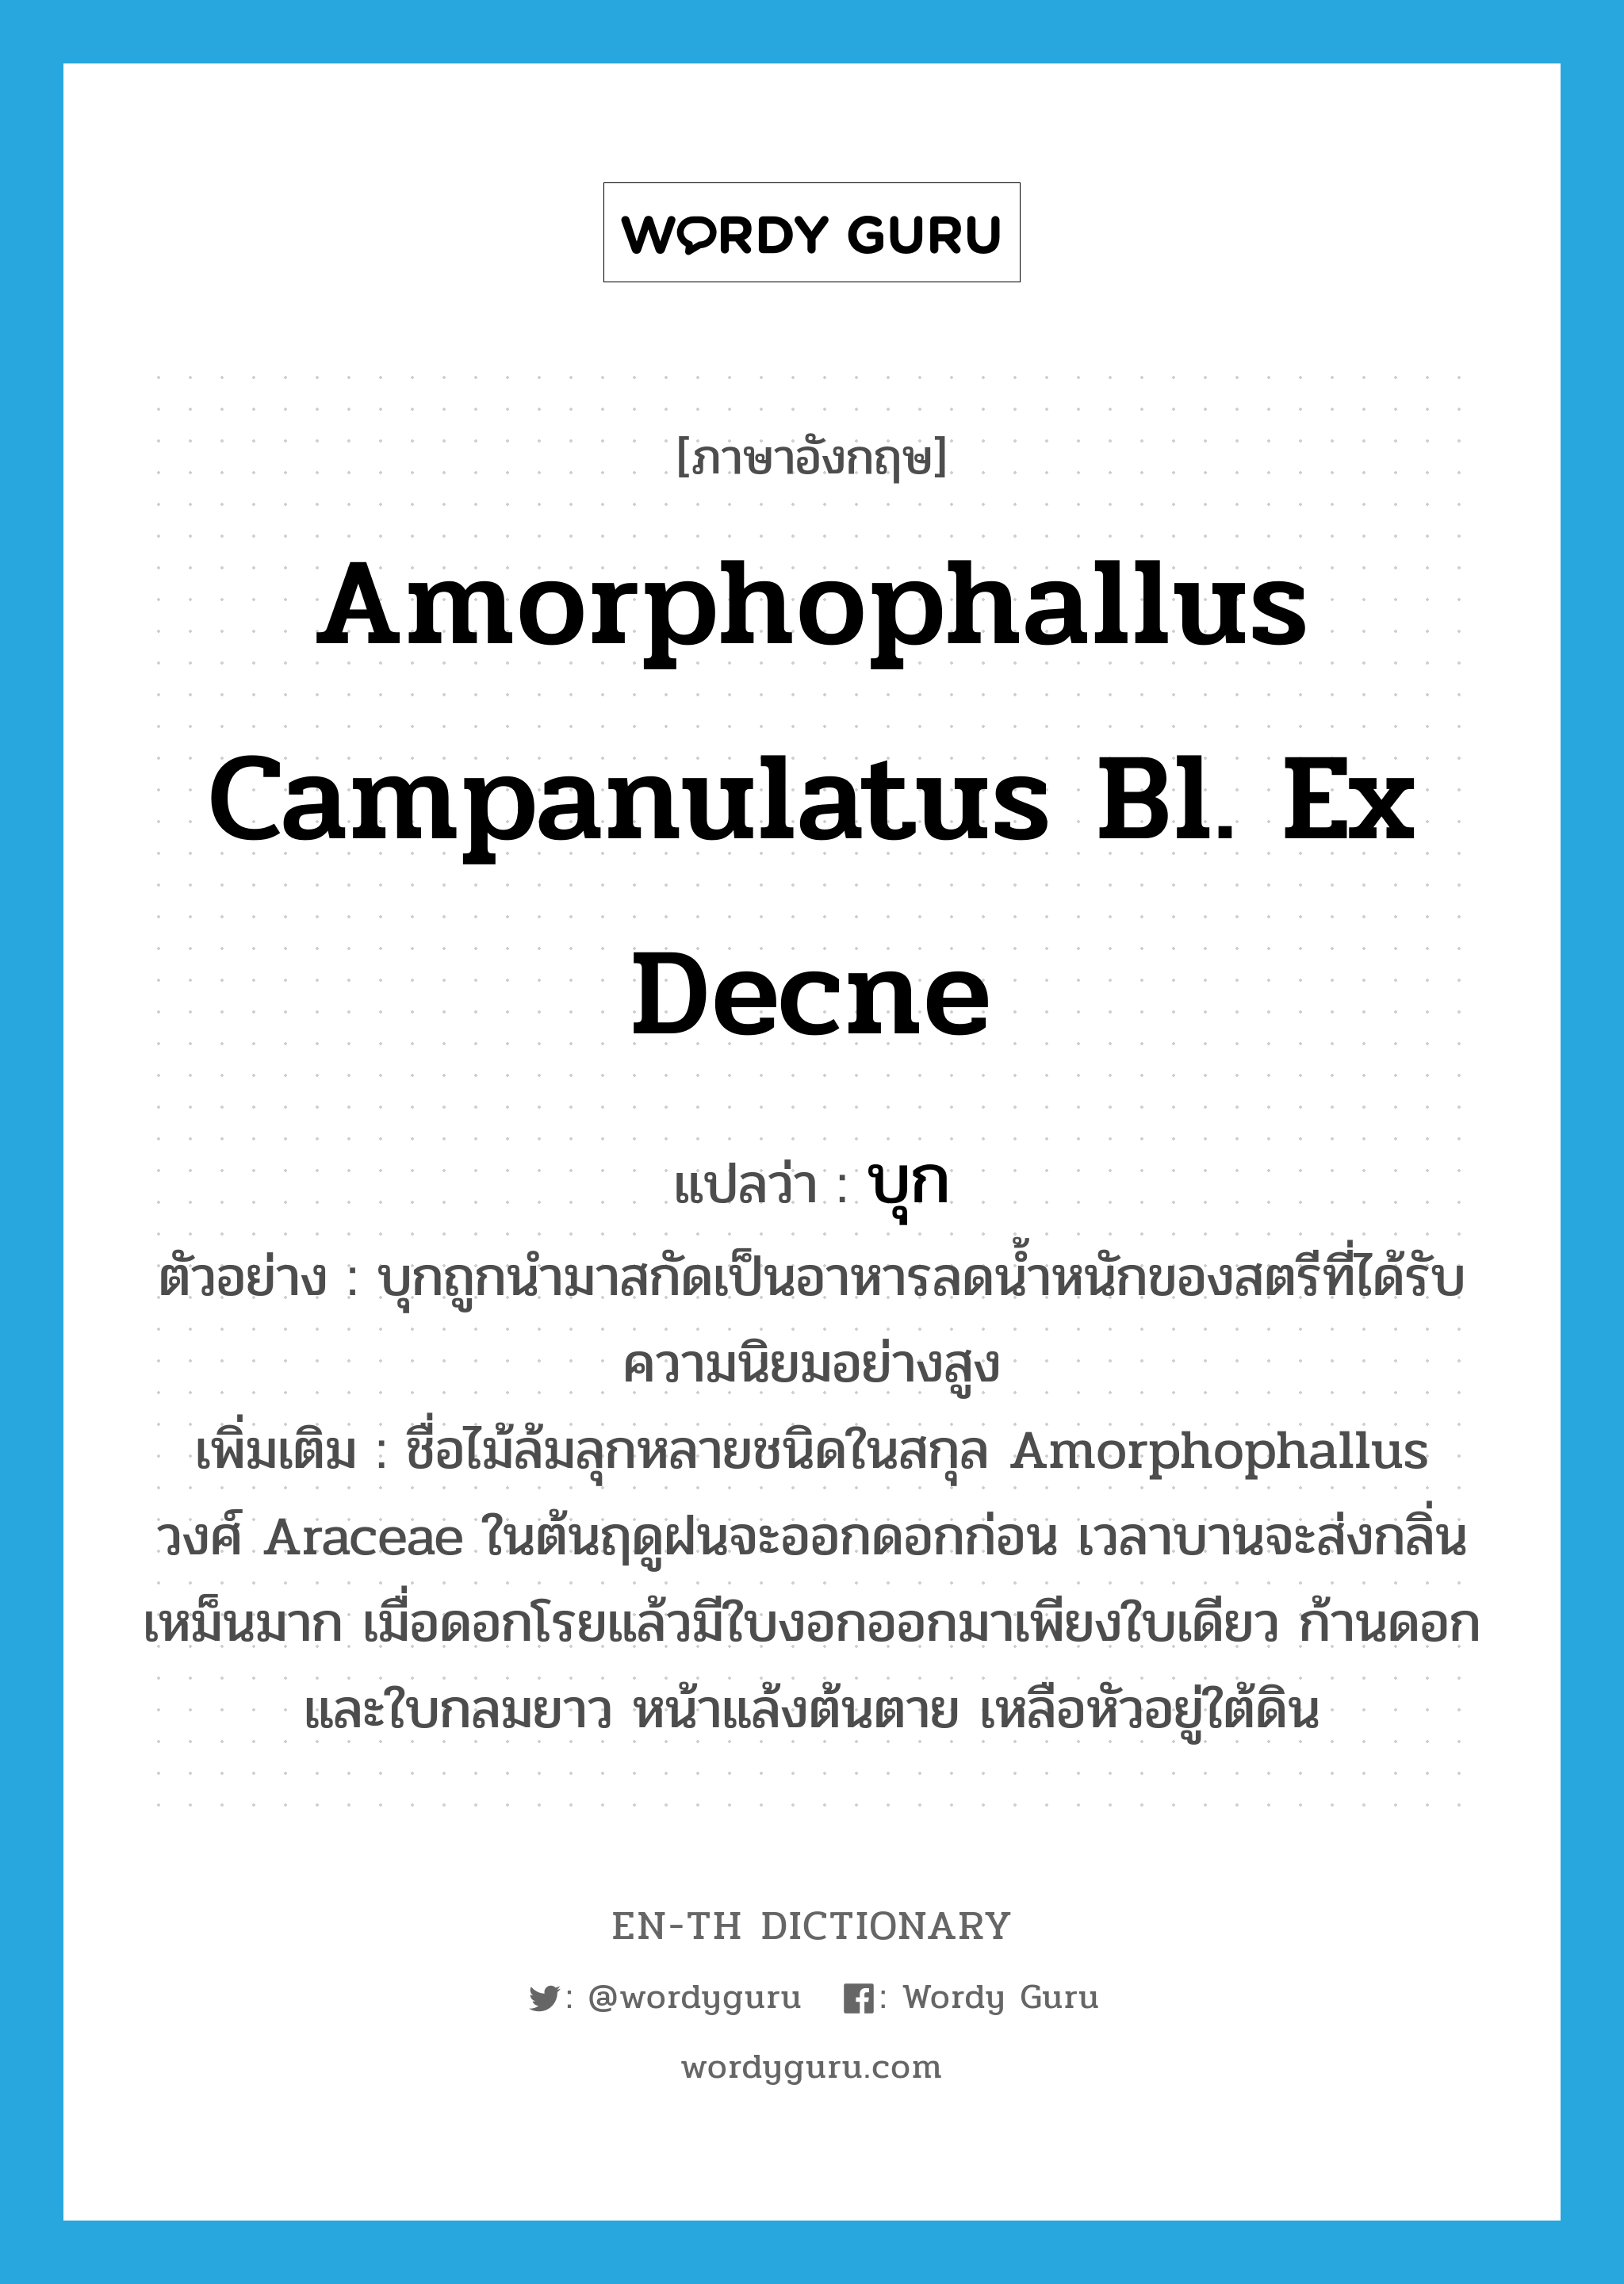 Amorphophallus campanulatus Bl. ex Decne แปลว่า?, คำศัพท์ภาษาอังกฤษ Amorphophallus campanulatus Bl. ex Decne แปลว่า บุก ประเภท N ตัวอย่าง บุกถูกนำมาสกัดเป็นอาหารลดน้ำหนักของสตรีที่ได้รับความนิยมอย่างสูง เพิ่มเติม ชื่อไม้ล้มลุกหลายชนิดในสกุล Amorphophallus วงศ์ Araceae ในต้นฤดูฝนจะออกดอกก่อน เวลาบานจะส่งกลิ่นเหม็นมาก เมื่อดอกโรยแล้วมีใบงอกออกมาเพียงใบเดียว ก้านดอกและใบกลมยาว หน้าแล้งต้นตาย เหลือหัวอยู่ใต้ดิน หมวด N